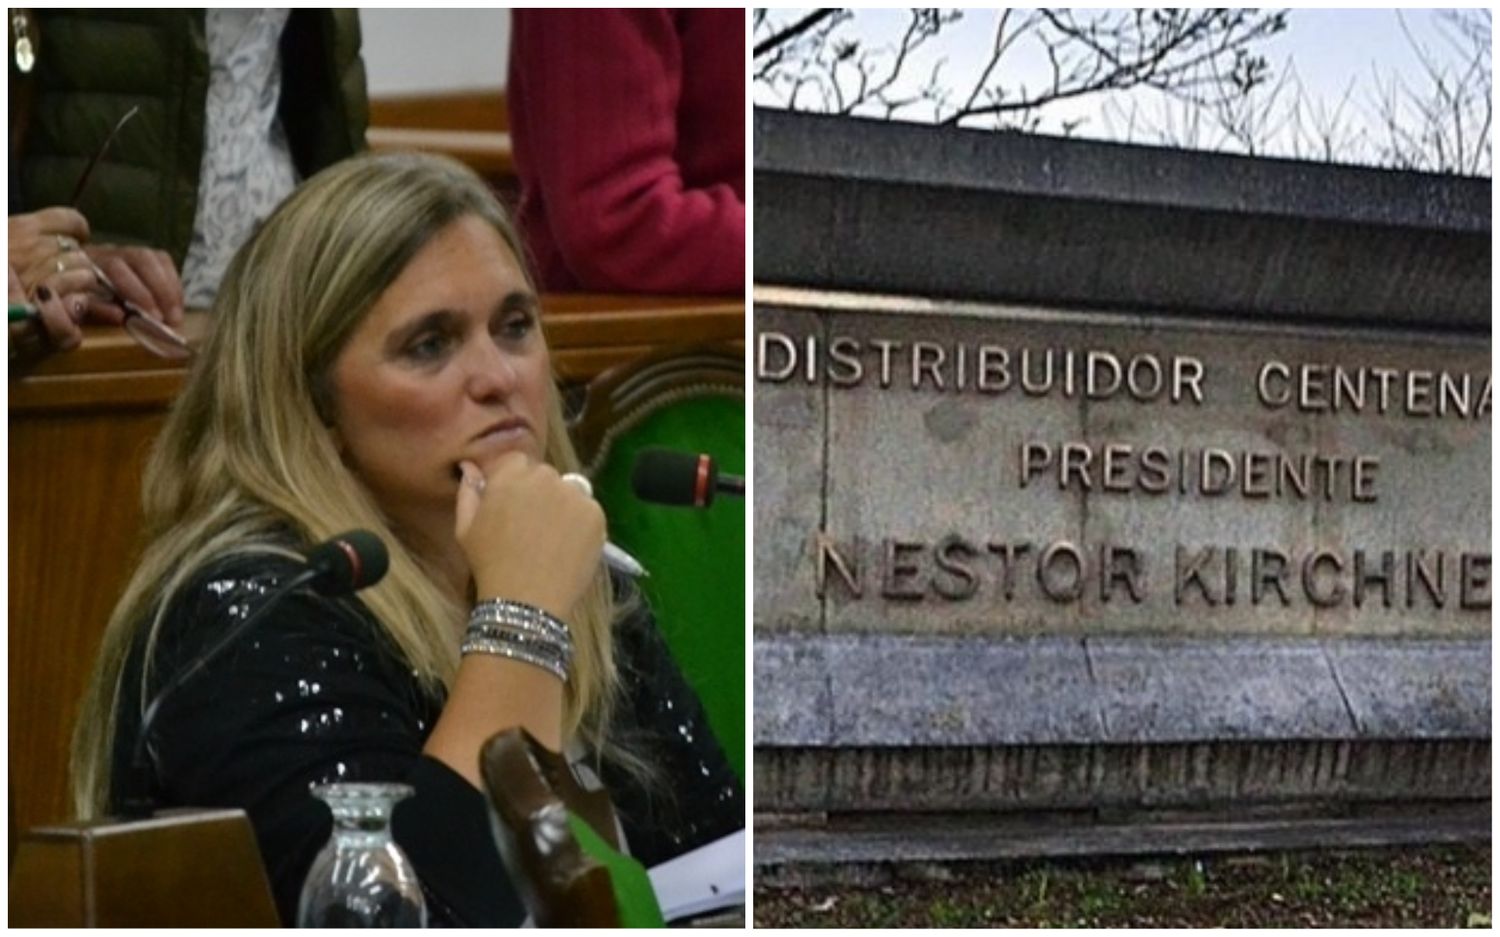 Agreden a la concejala que propone suprimir el nombre de Néstor Kirchner en Vicente López